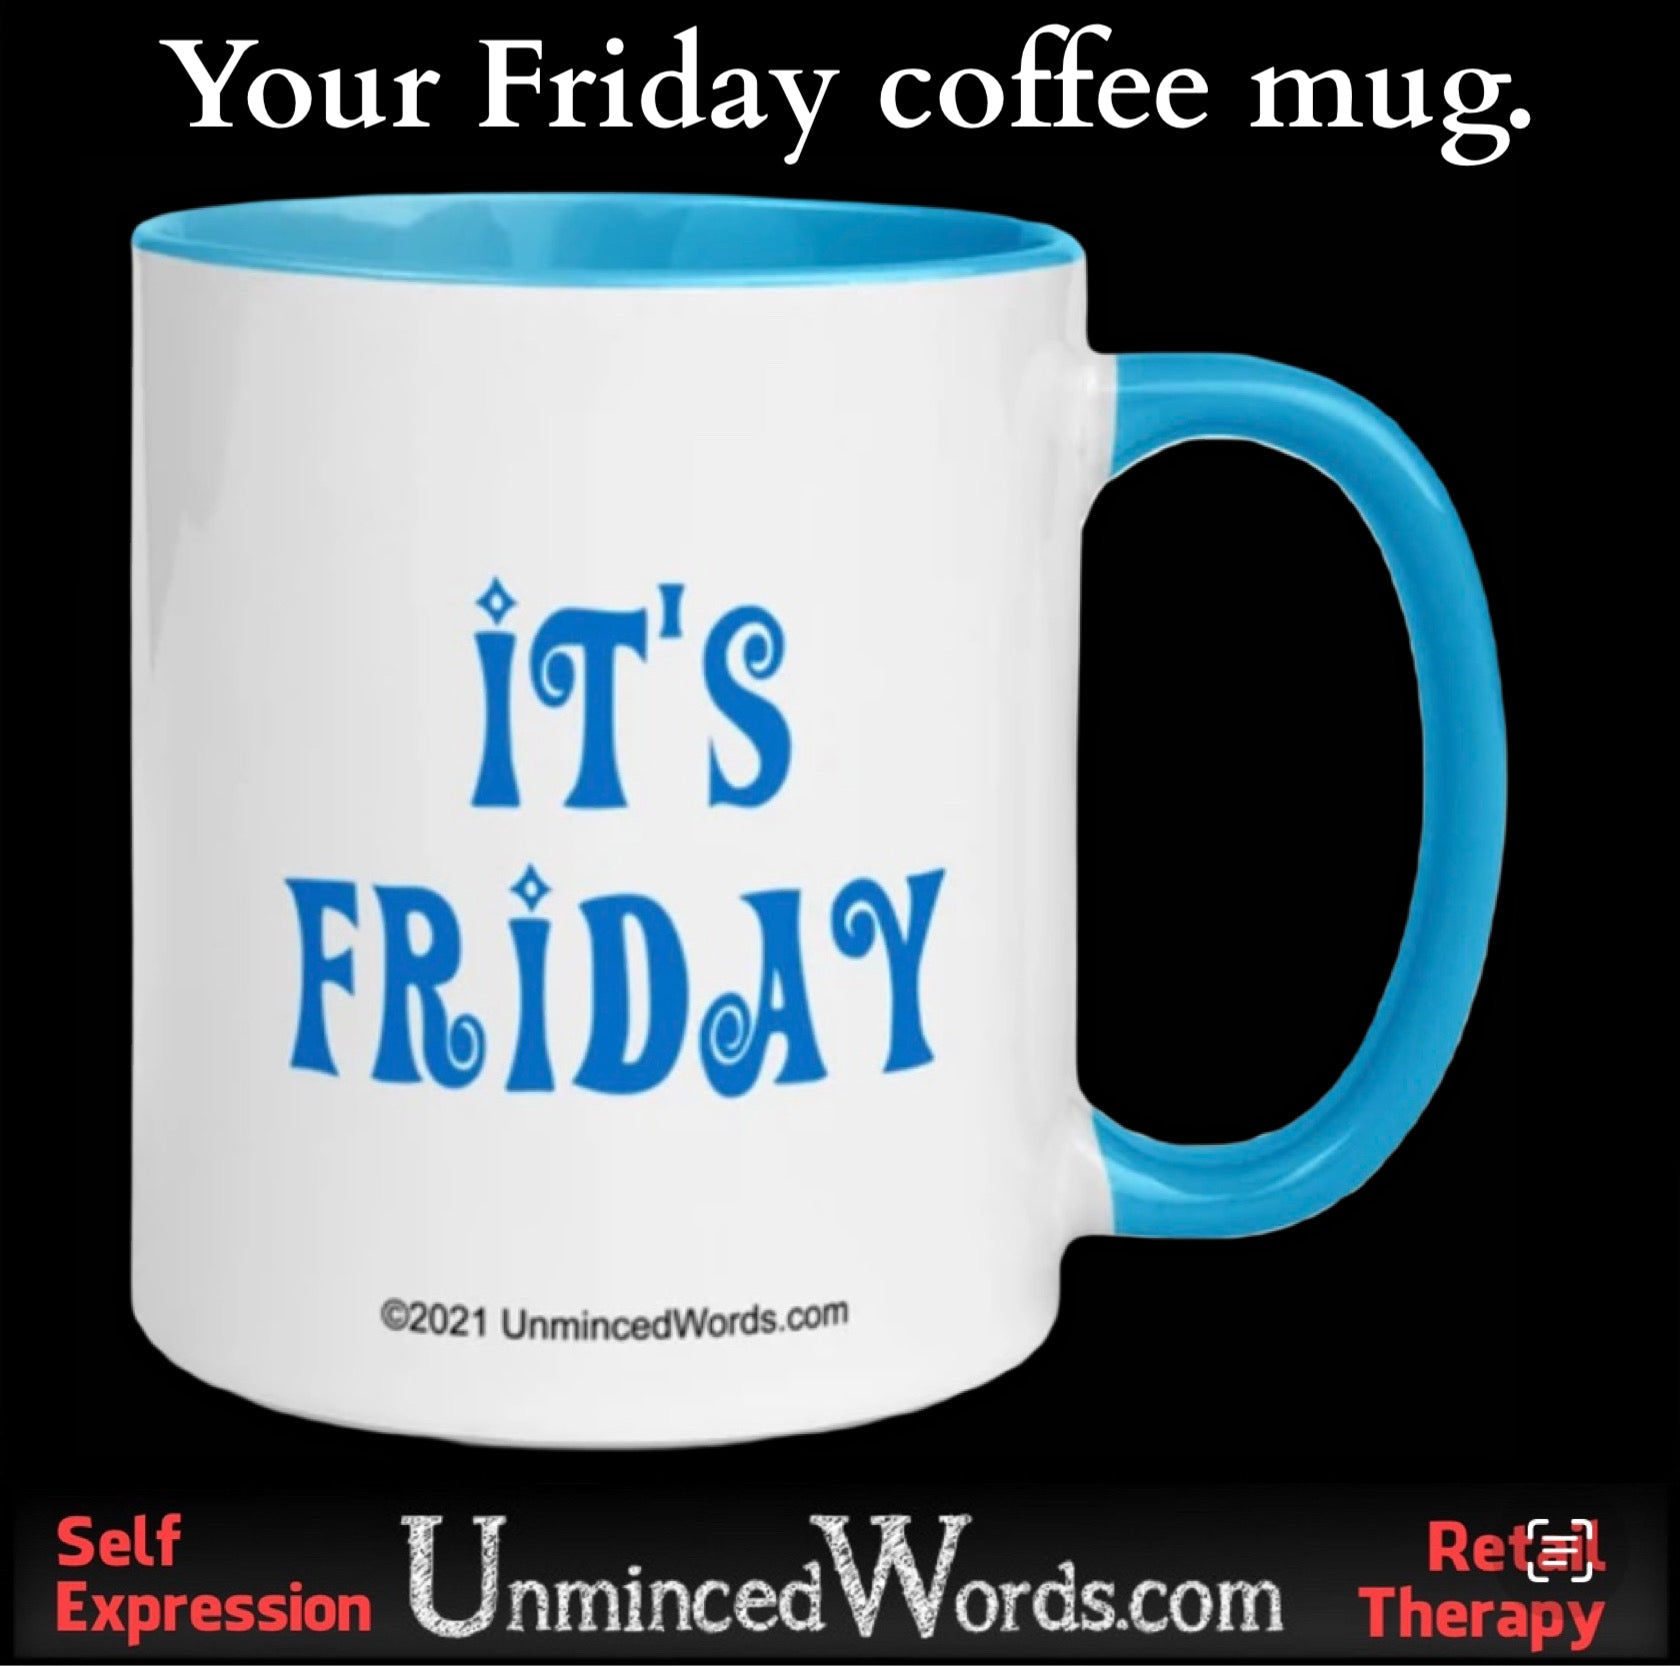 Your Friday morning coffee mug